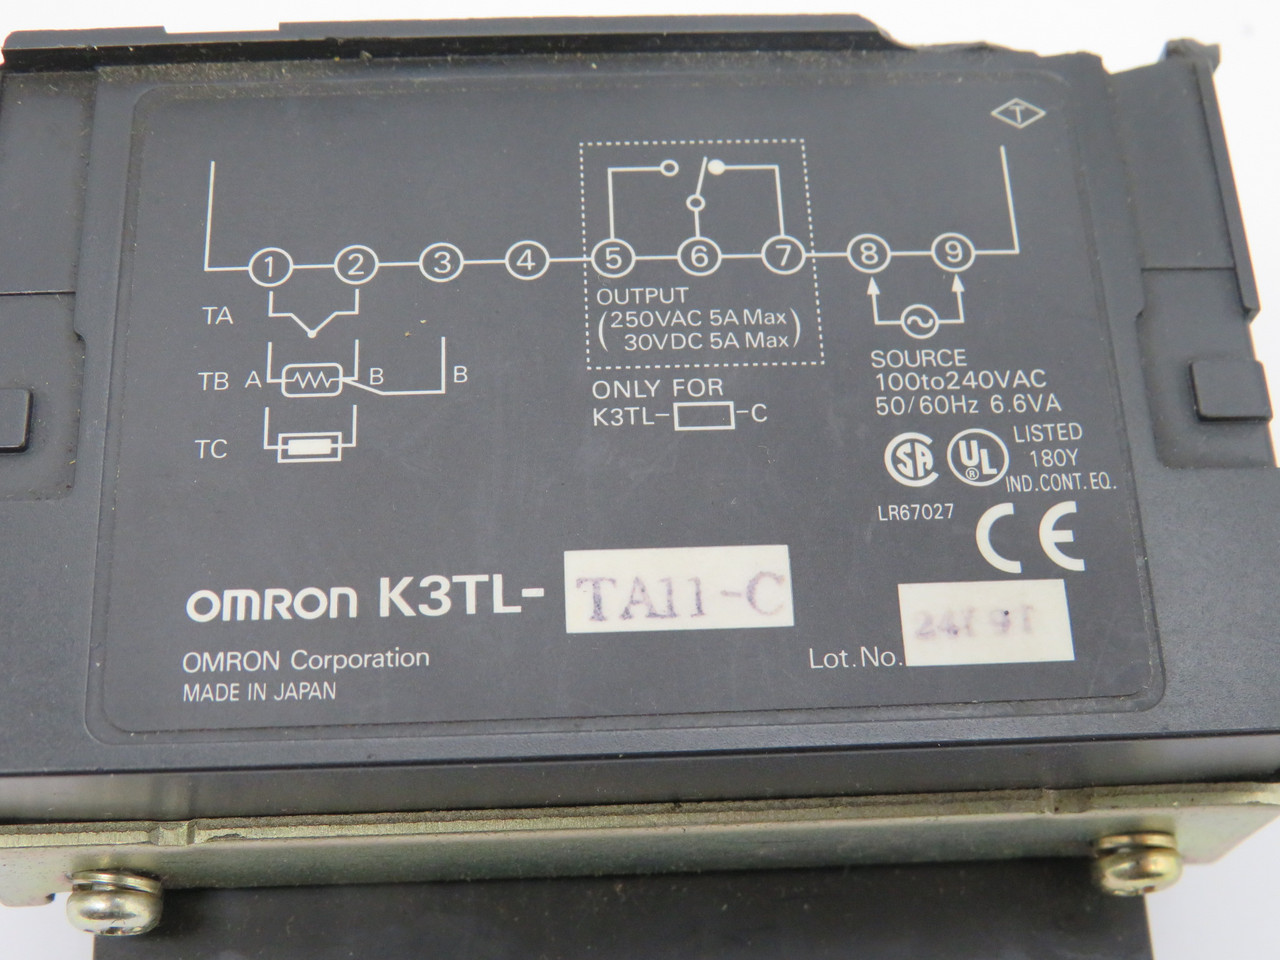 Omron K3TL-TA11-C 3 Digit Panel Meter 250VAC *Broken Front Cover Clip* AS IS